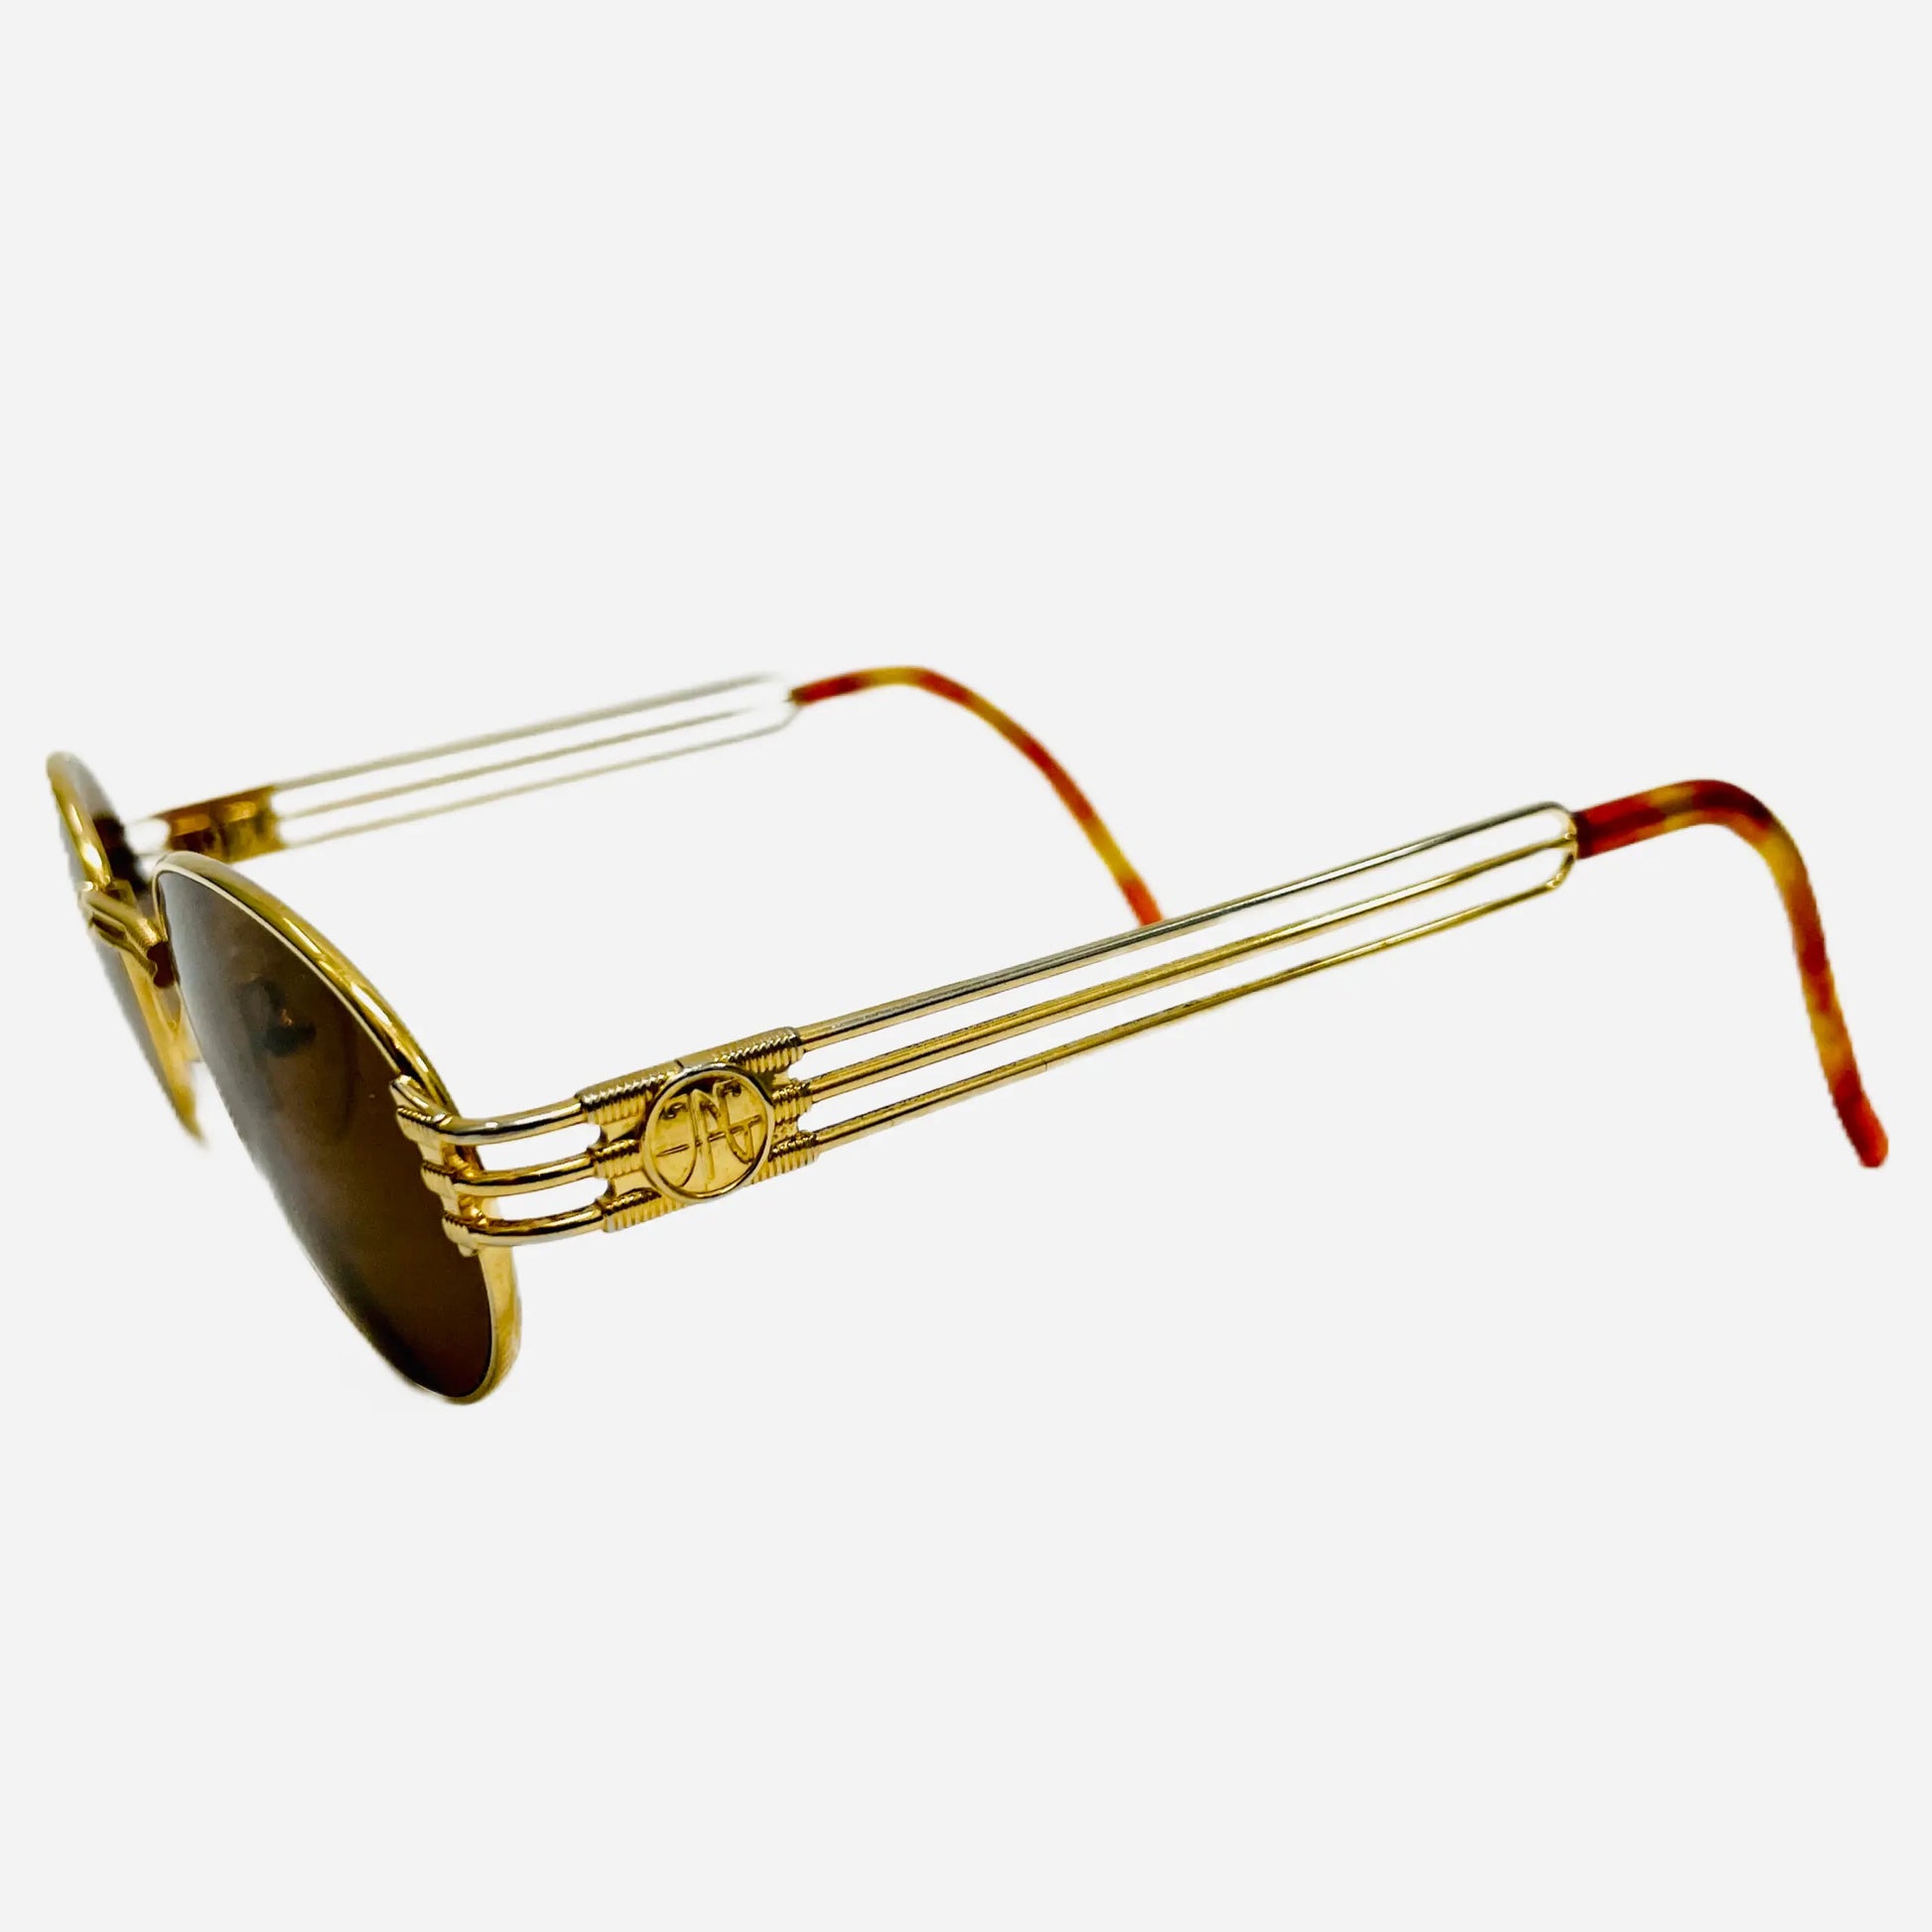 Vintage-Jean-Paul-Gaultier-Sonnenbrille-Sunglasses-57-5107-the-seekers-side